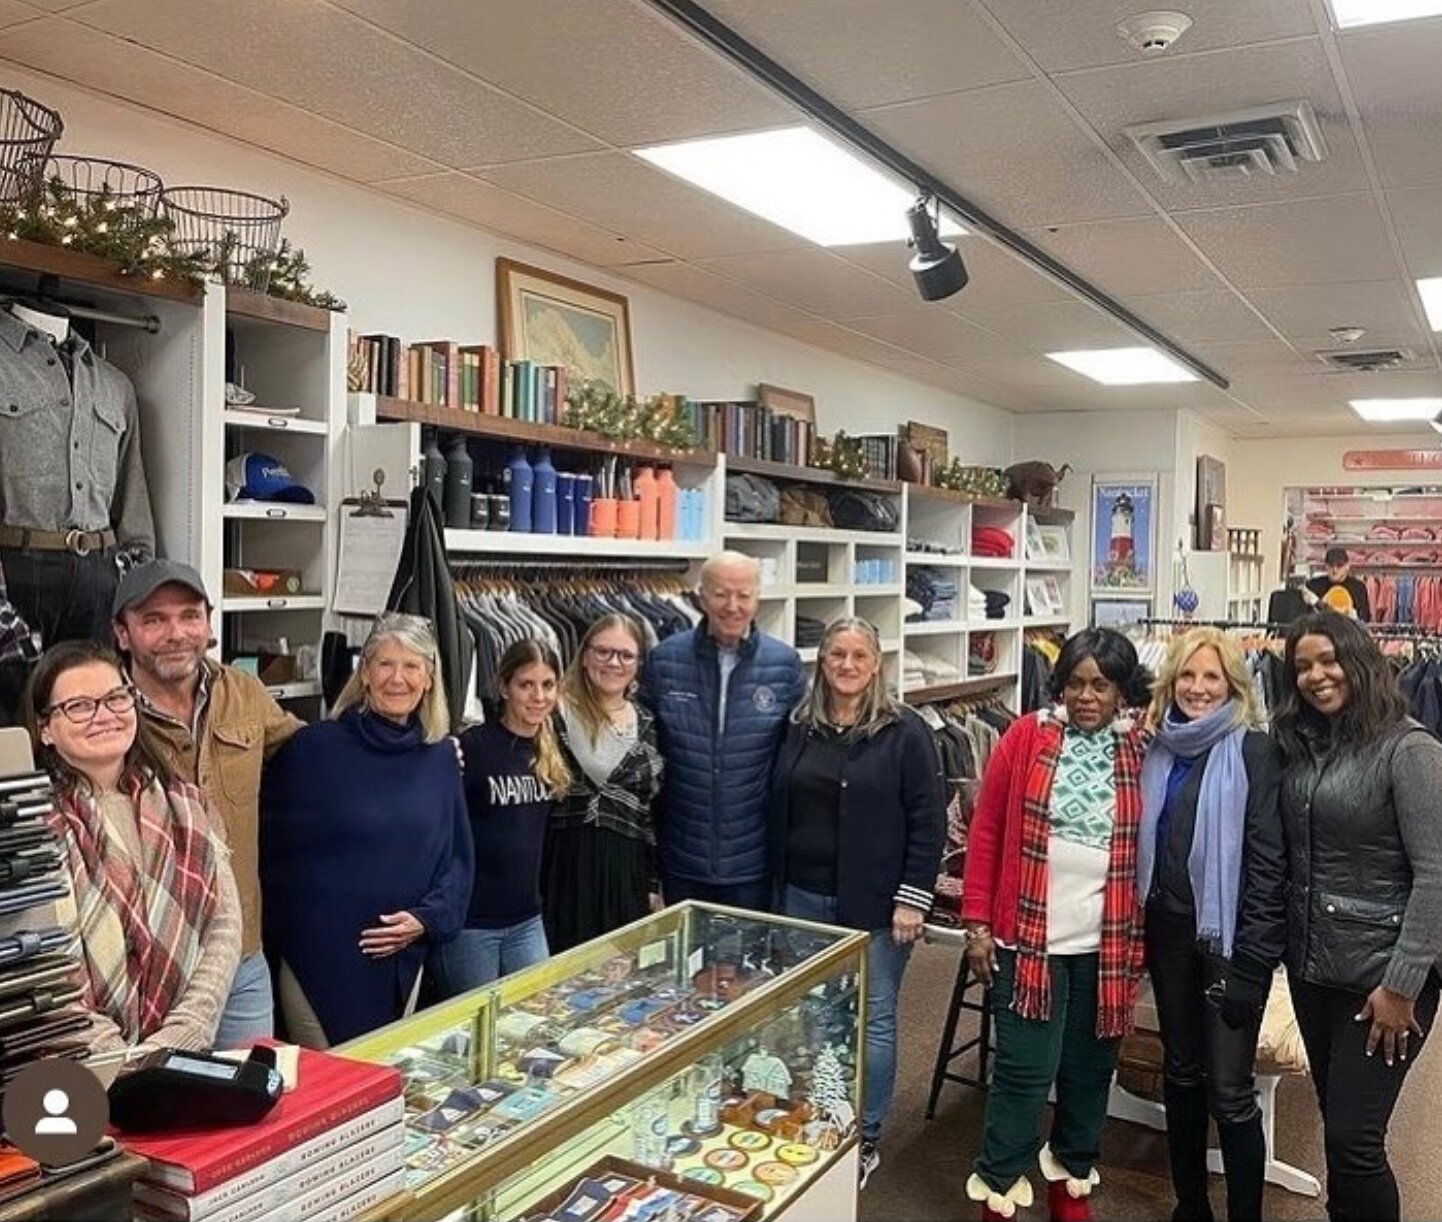 Biden popped into Murray's Toggery shop Saturday.